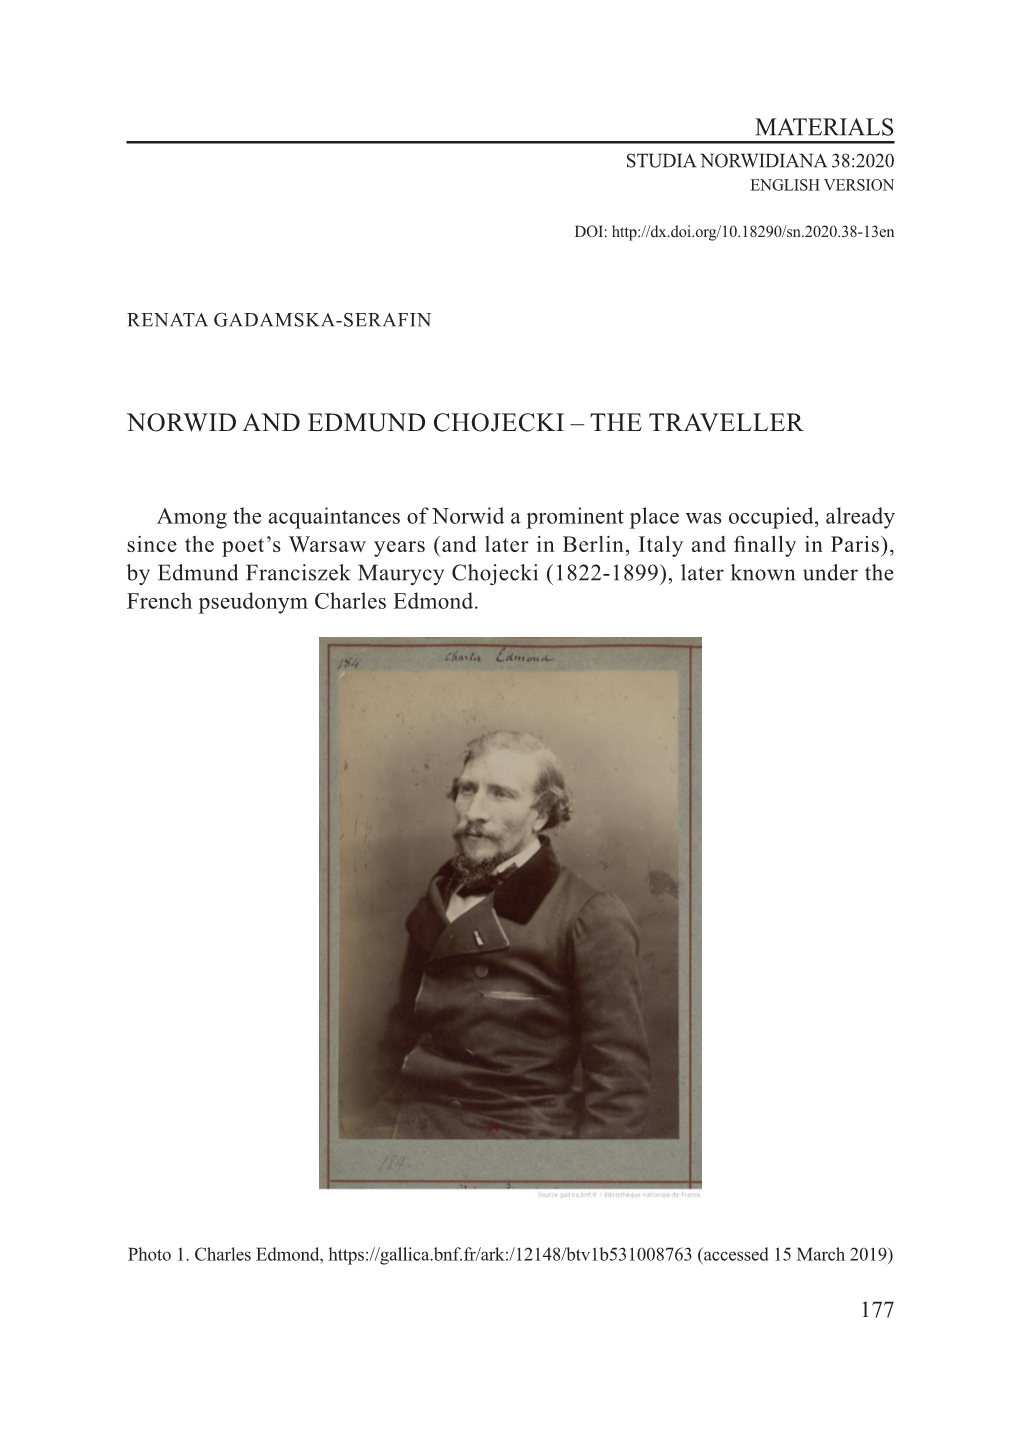 Norwid and Edmund Chojecki – the Traveller